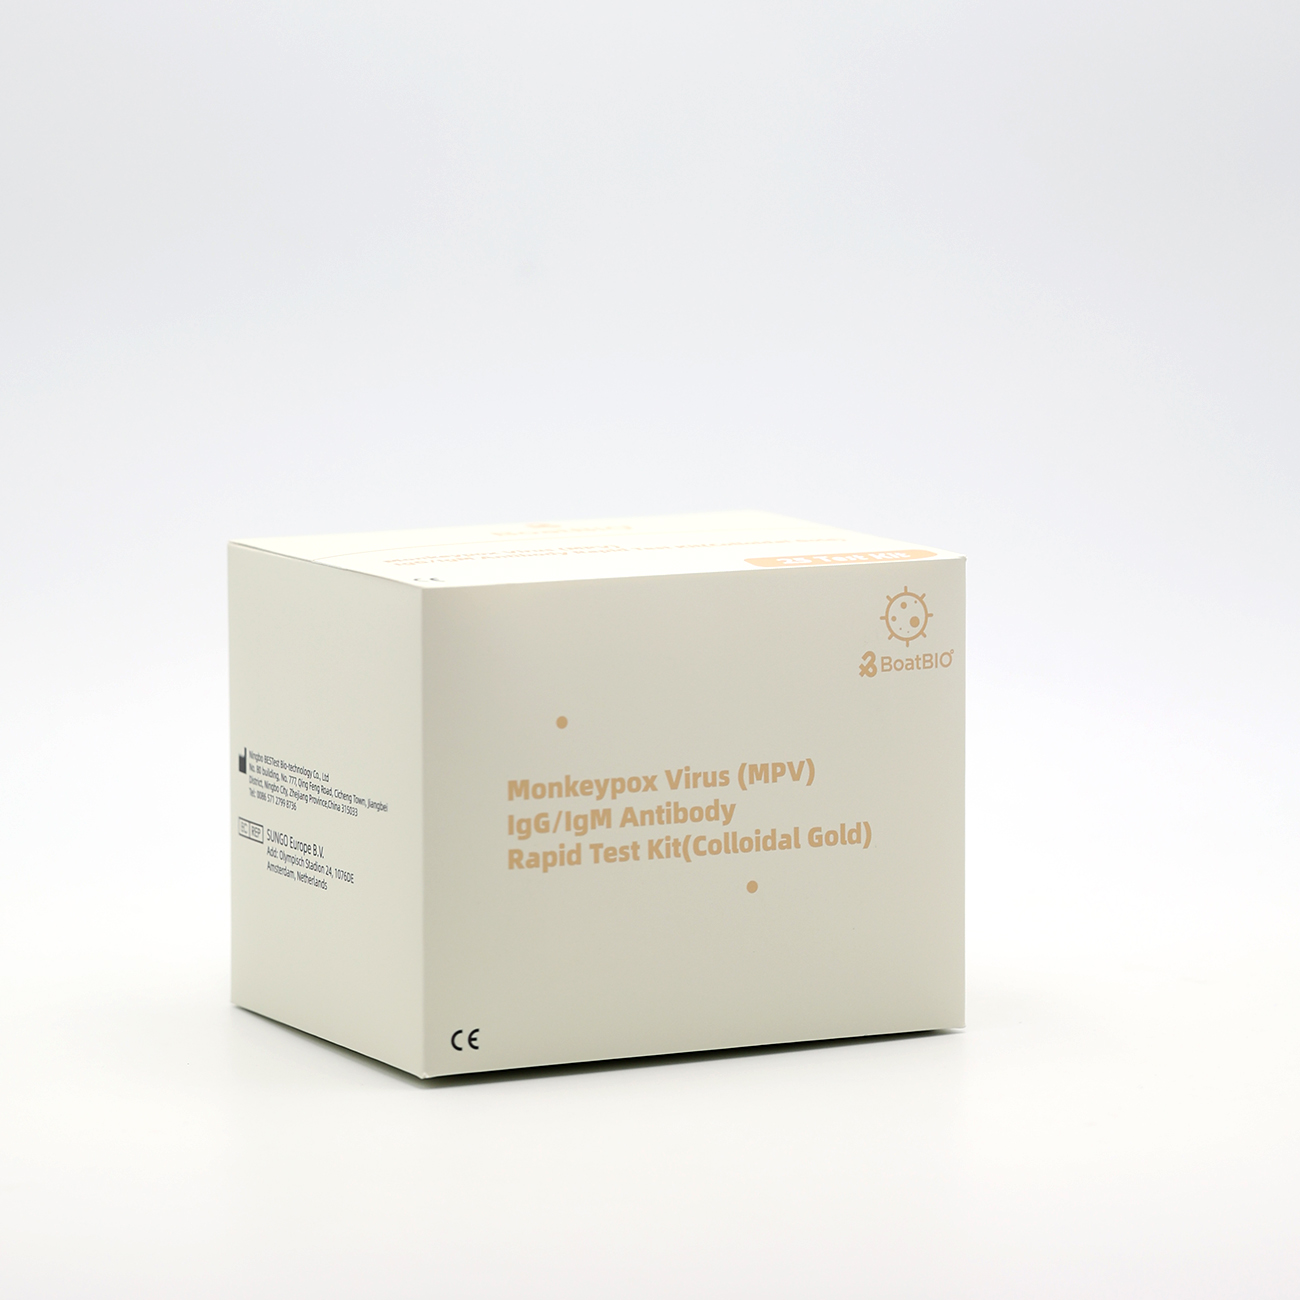 Monkeypox Virus (MPV) Antigen Rapid Test Kit (Colloidal Gold)